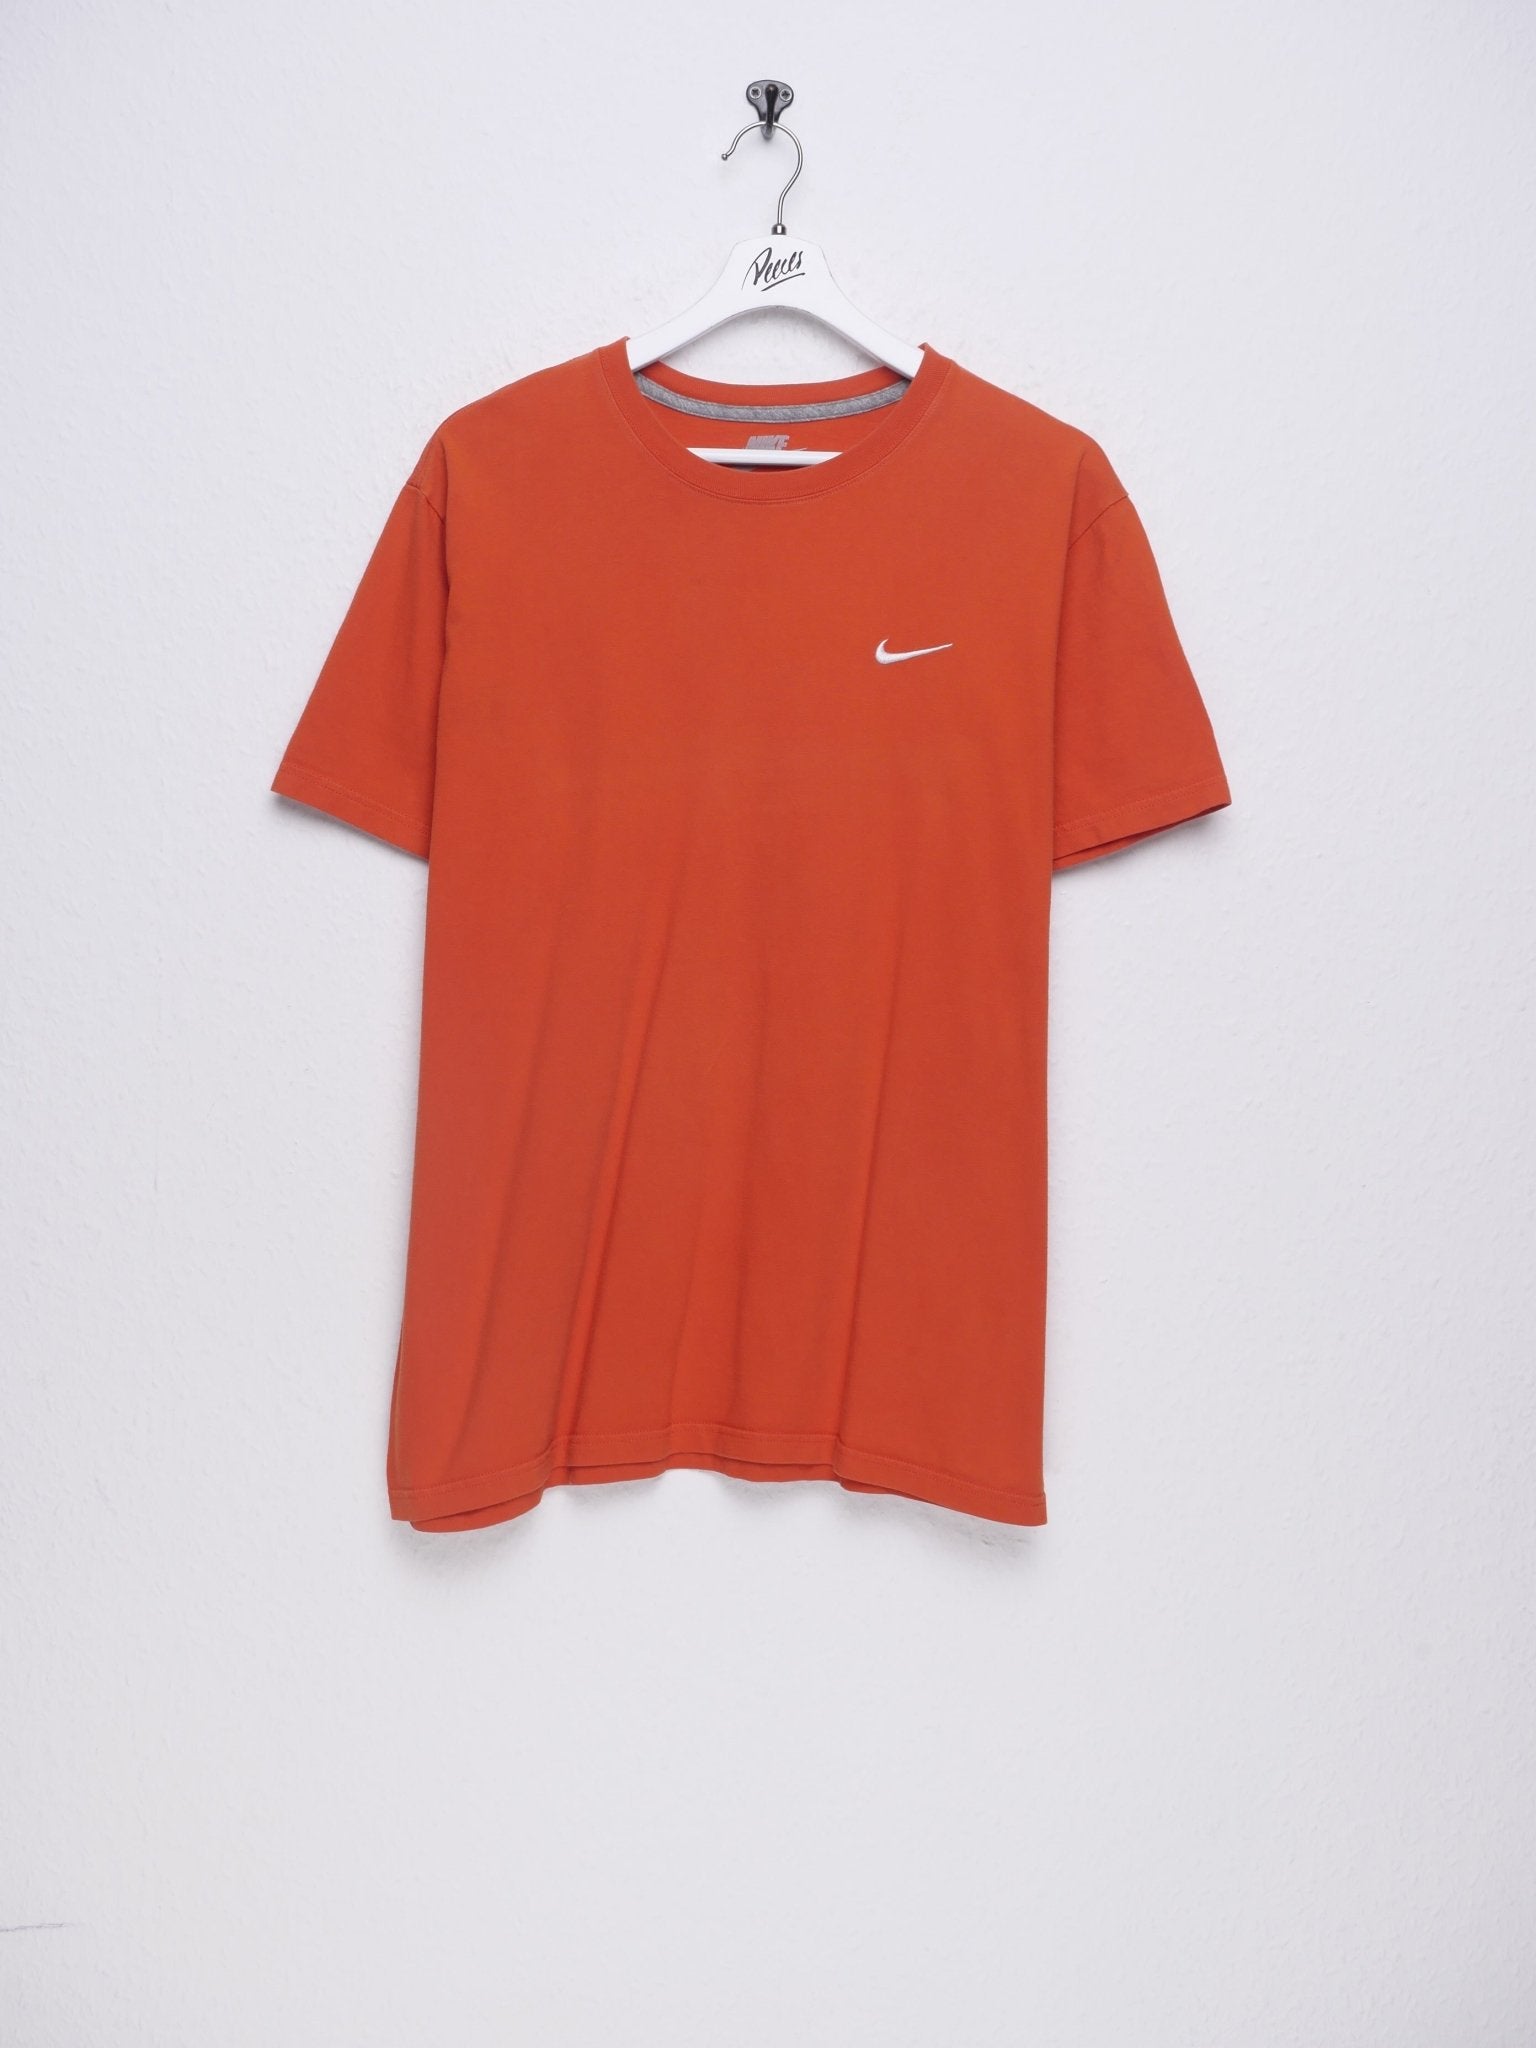 Nike embroidered Swoosh orange Shirt - Peeces